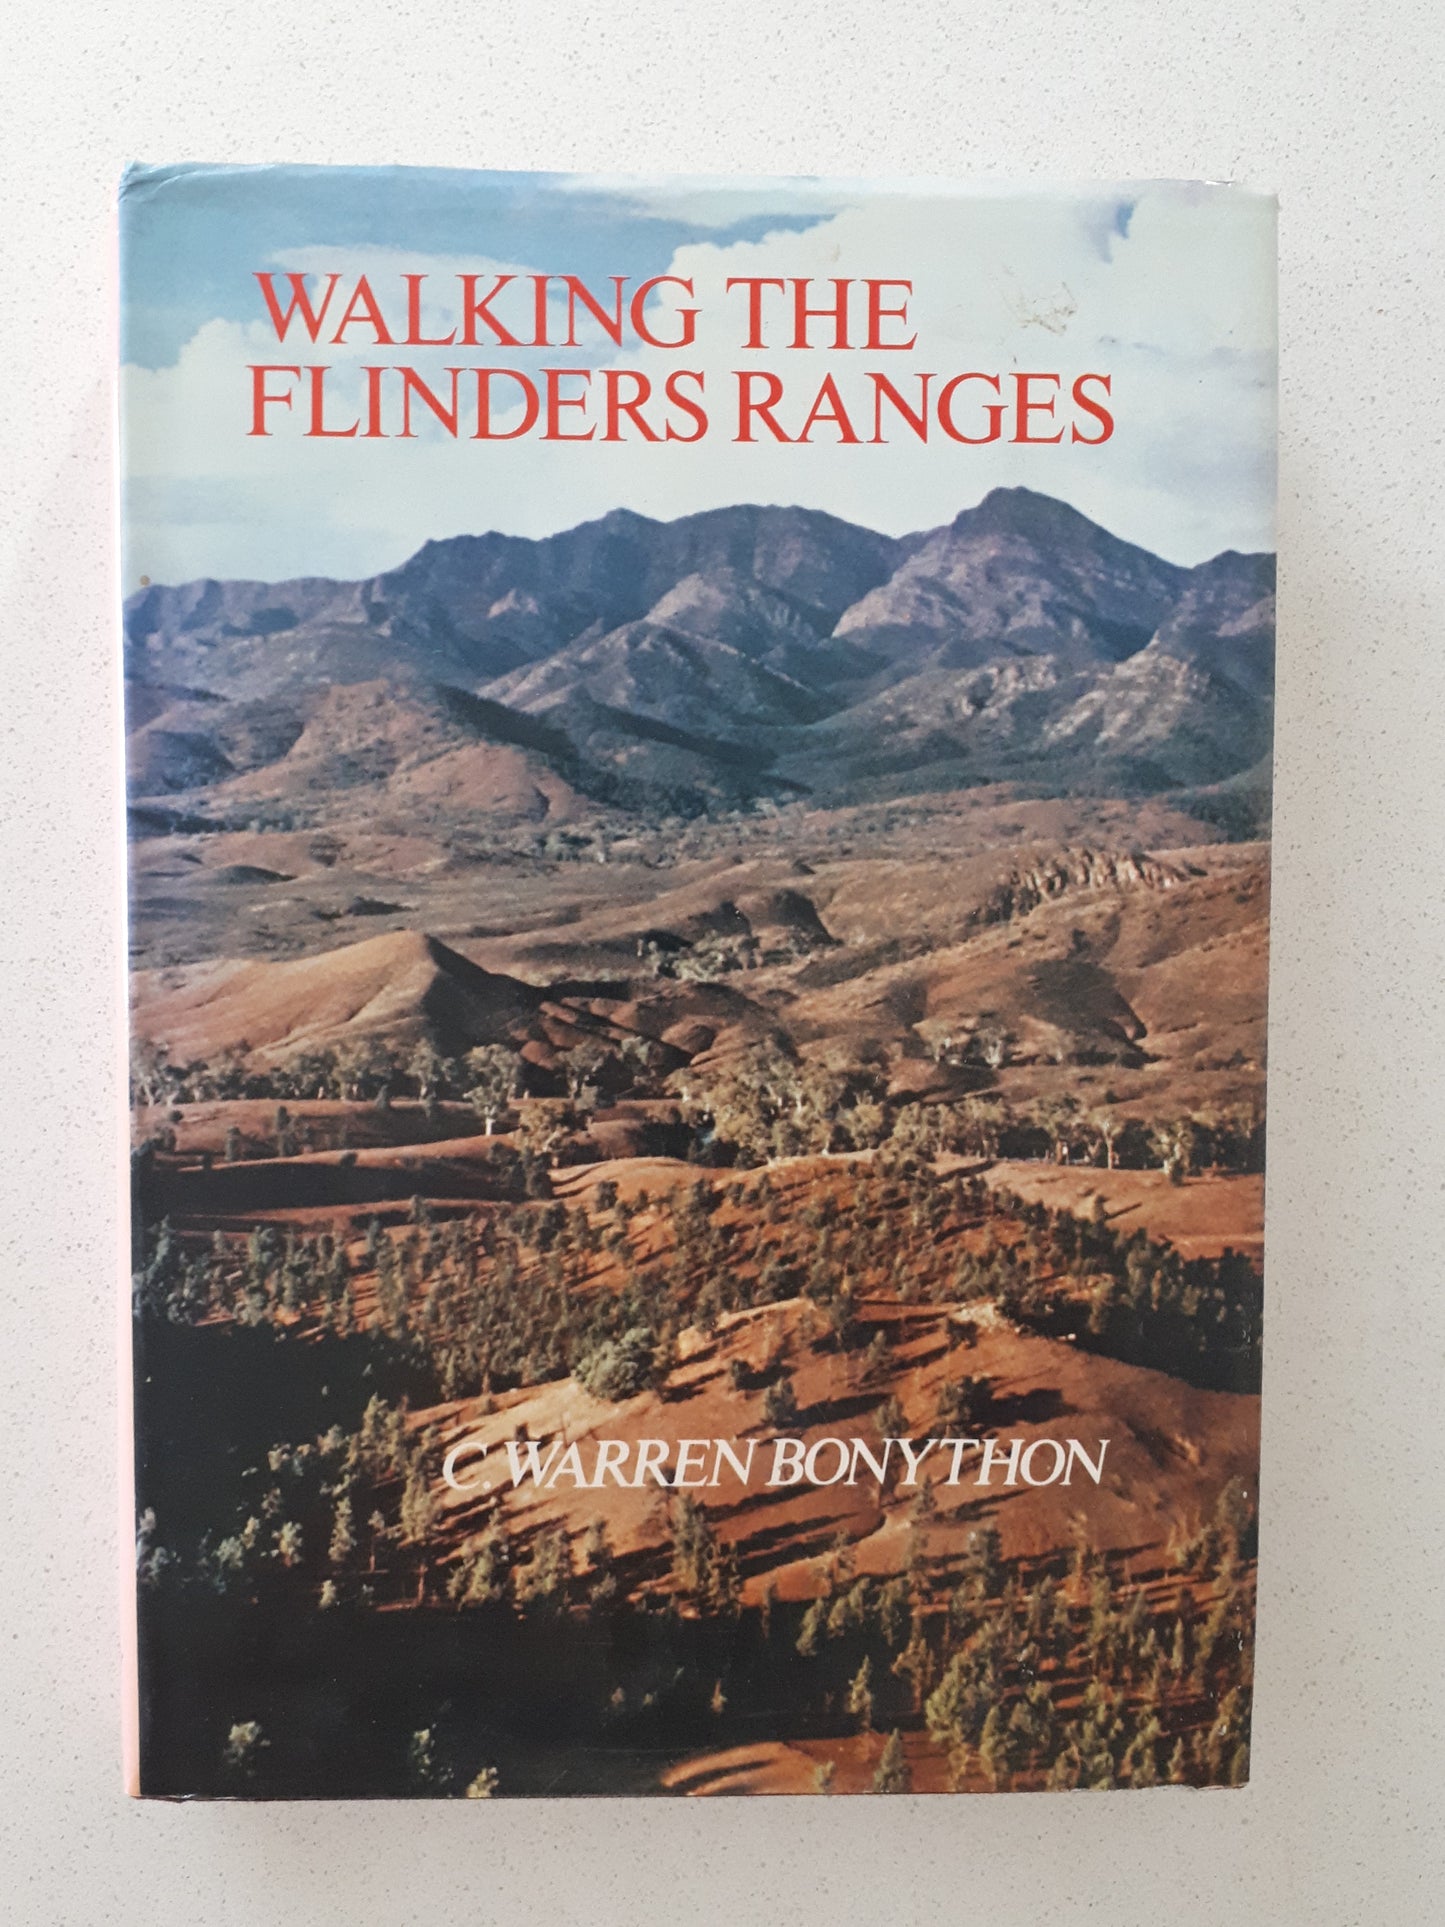 Walking The Flinders Ranges by C. Warren Bonython